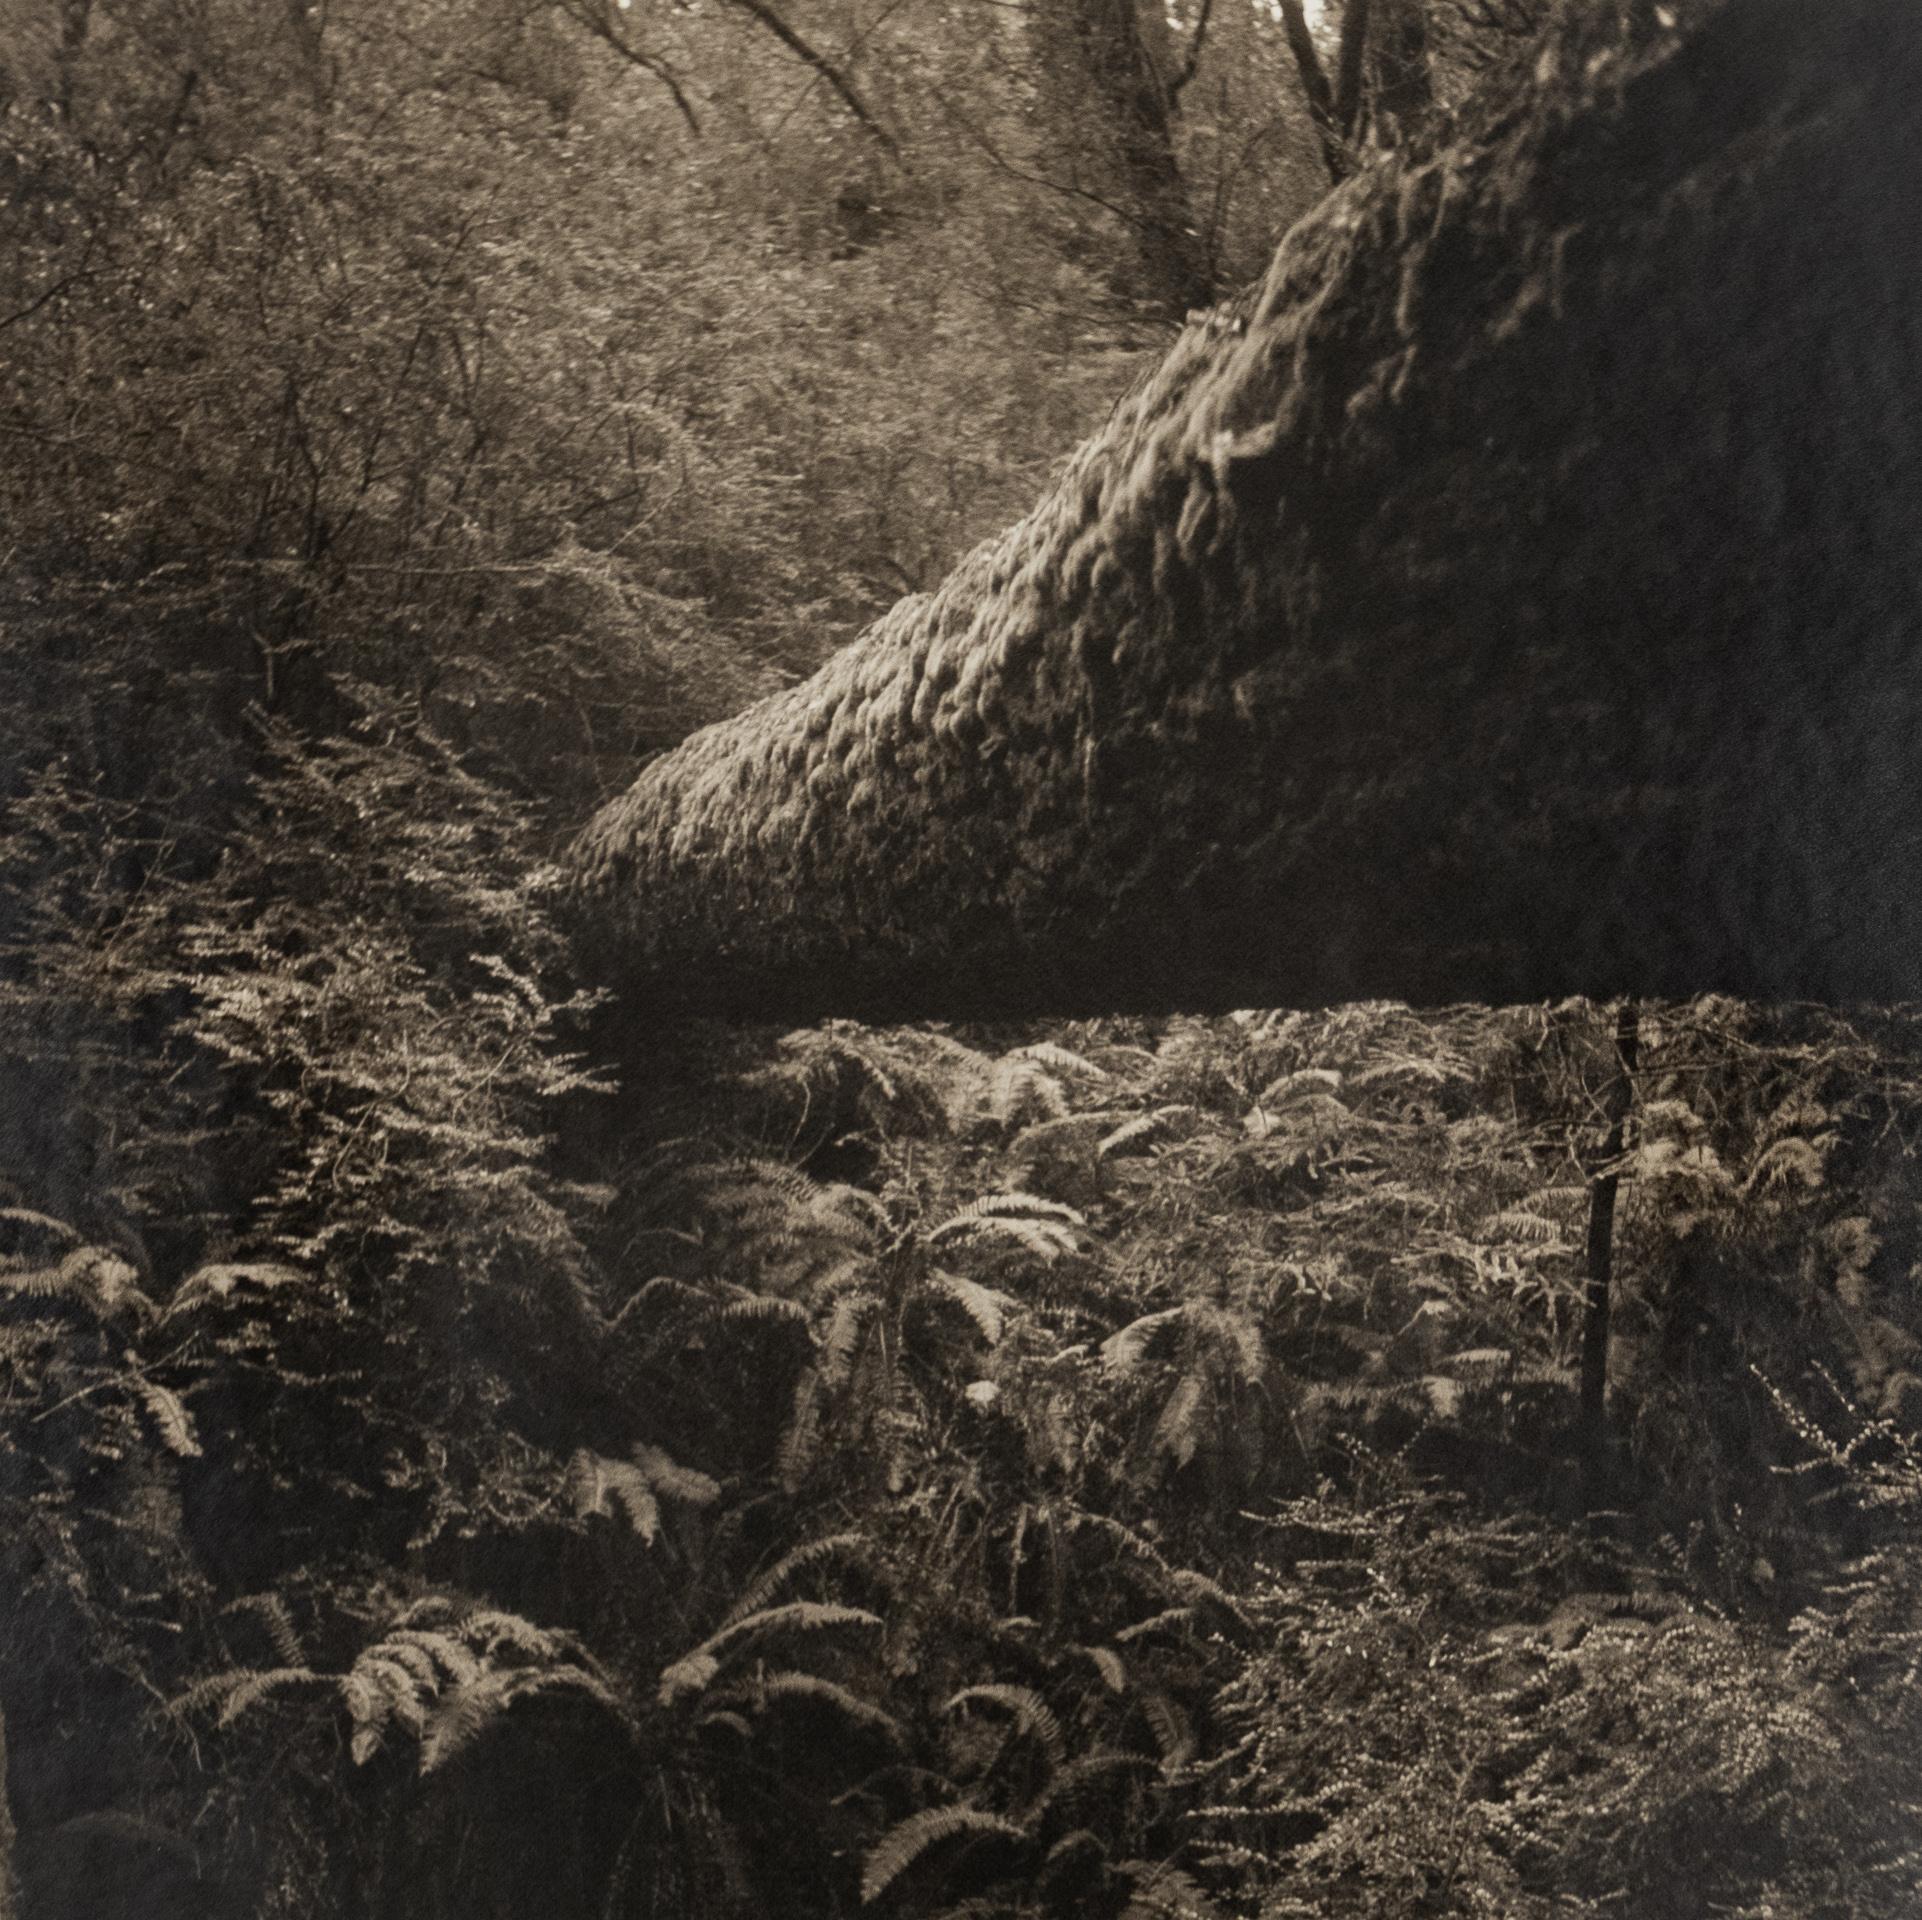 Black and White Photograph David Halliday - Séquoia tombé